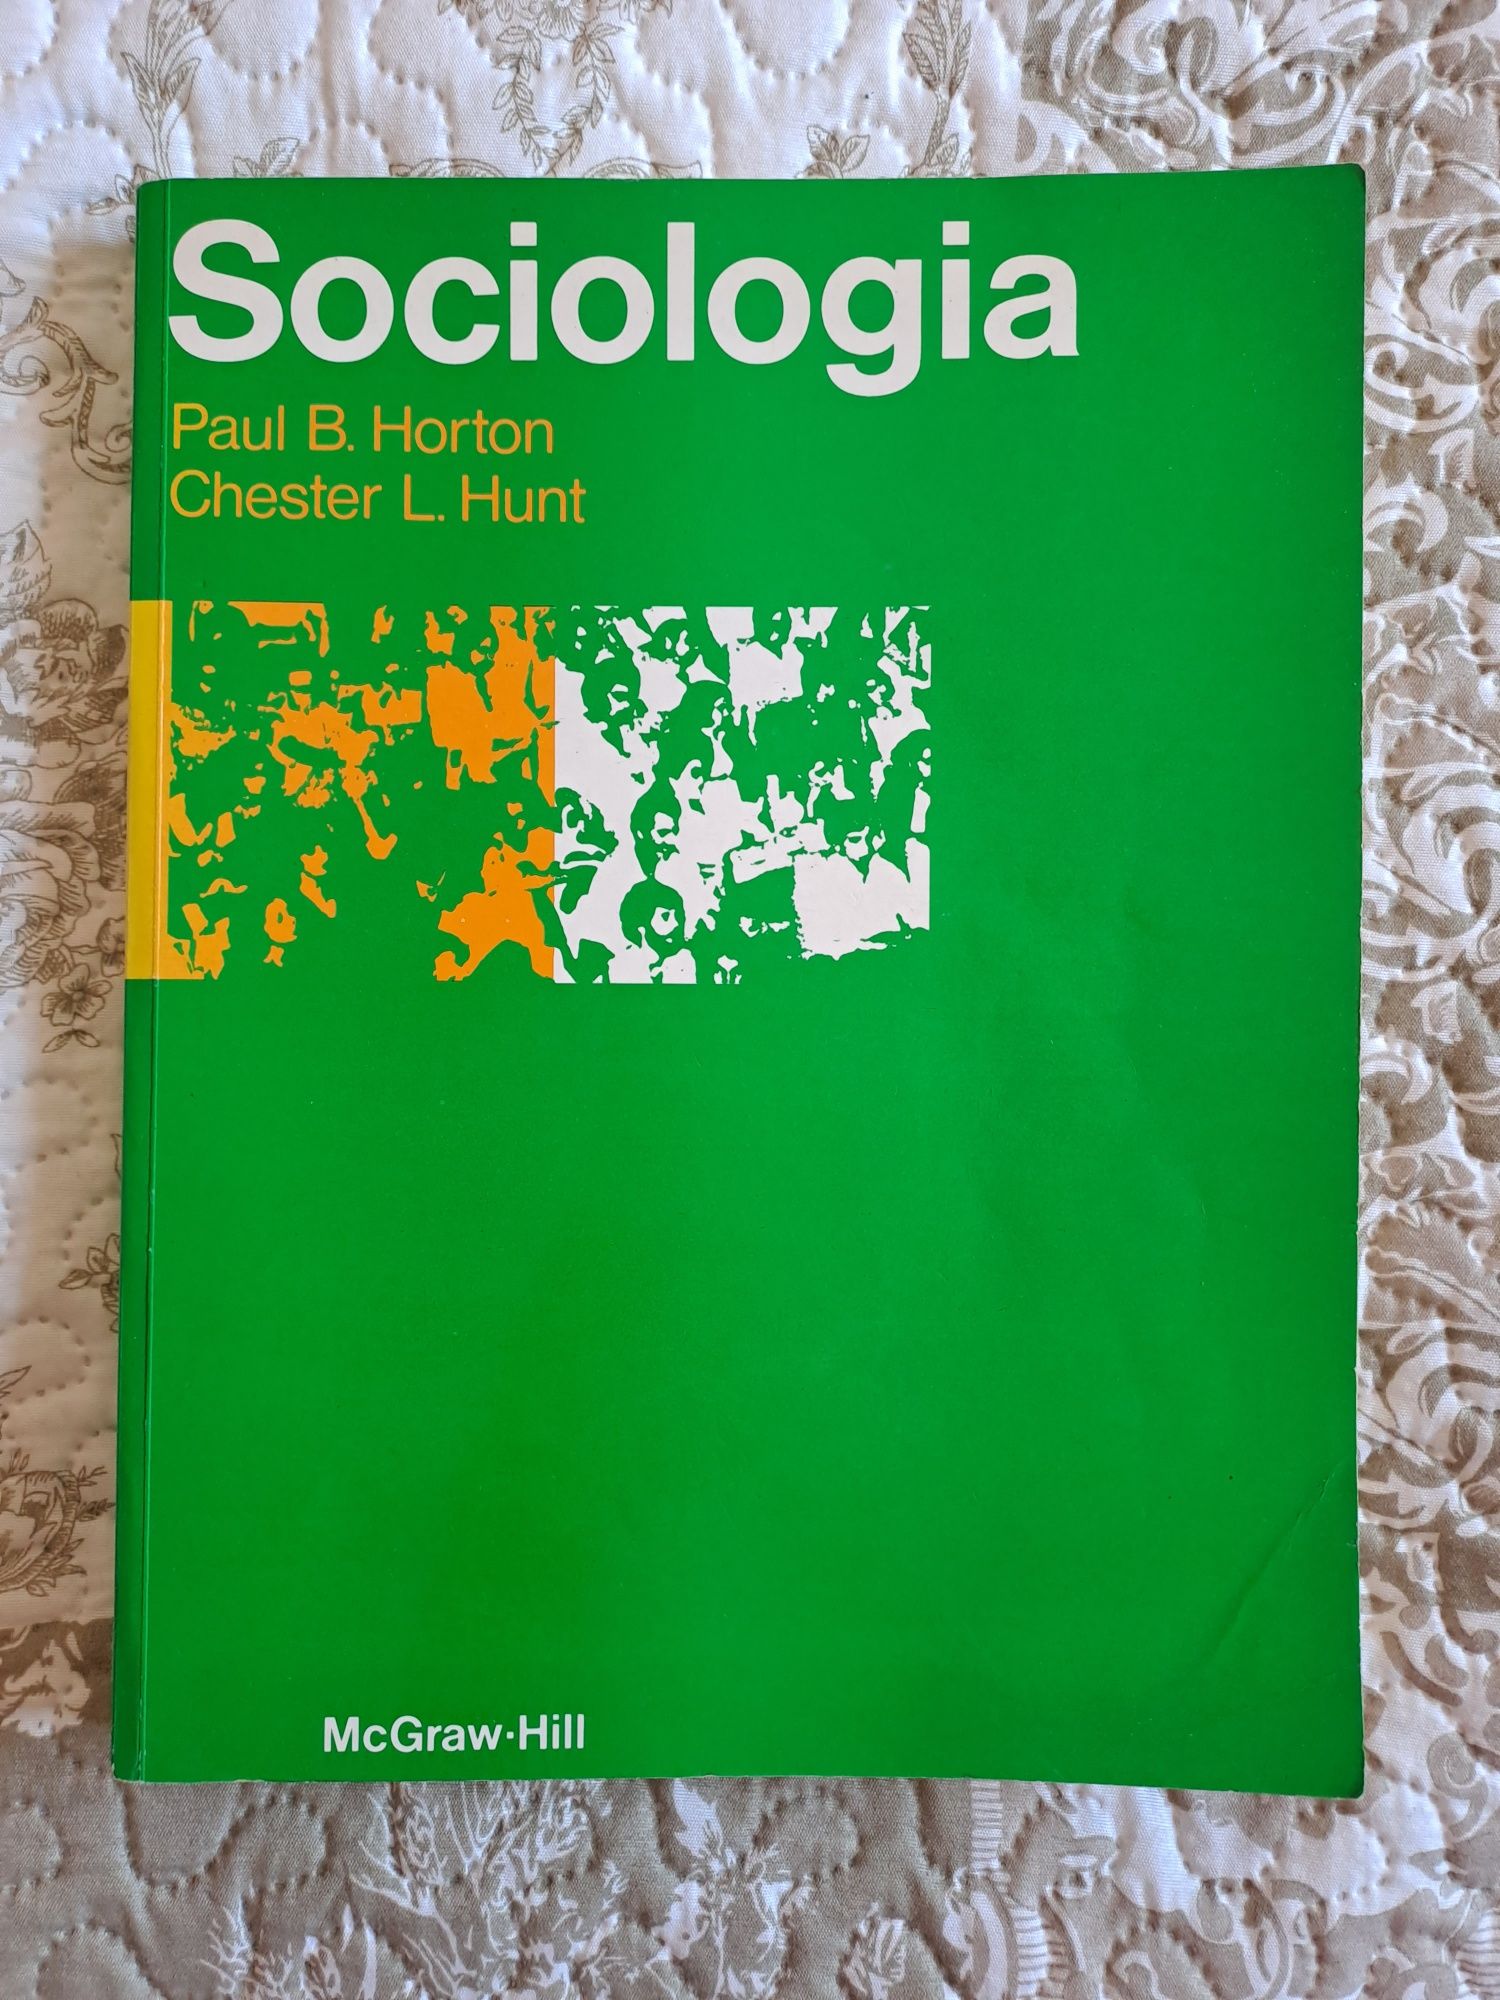 Livro "Sociologia" de Paul B. Horton e Chester L. Hunt